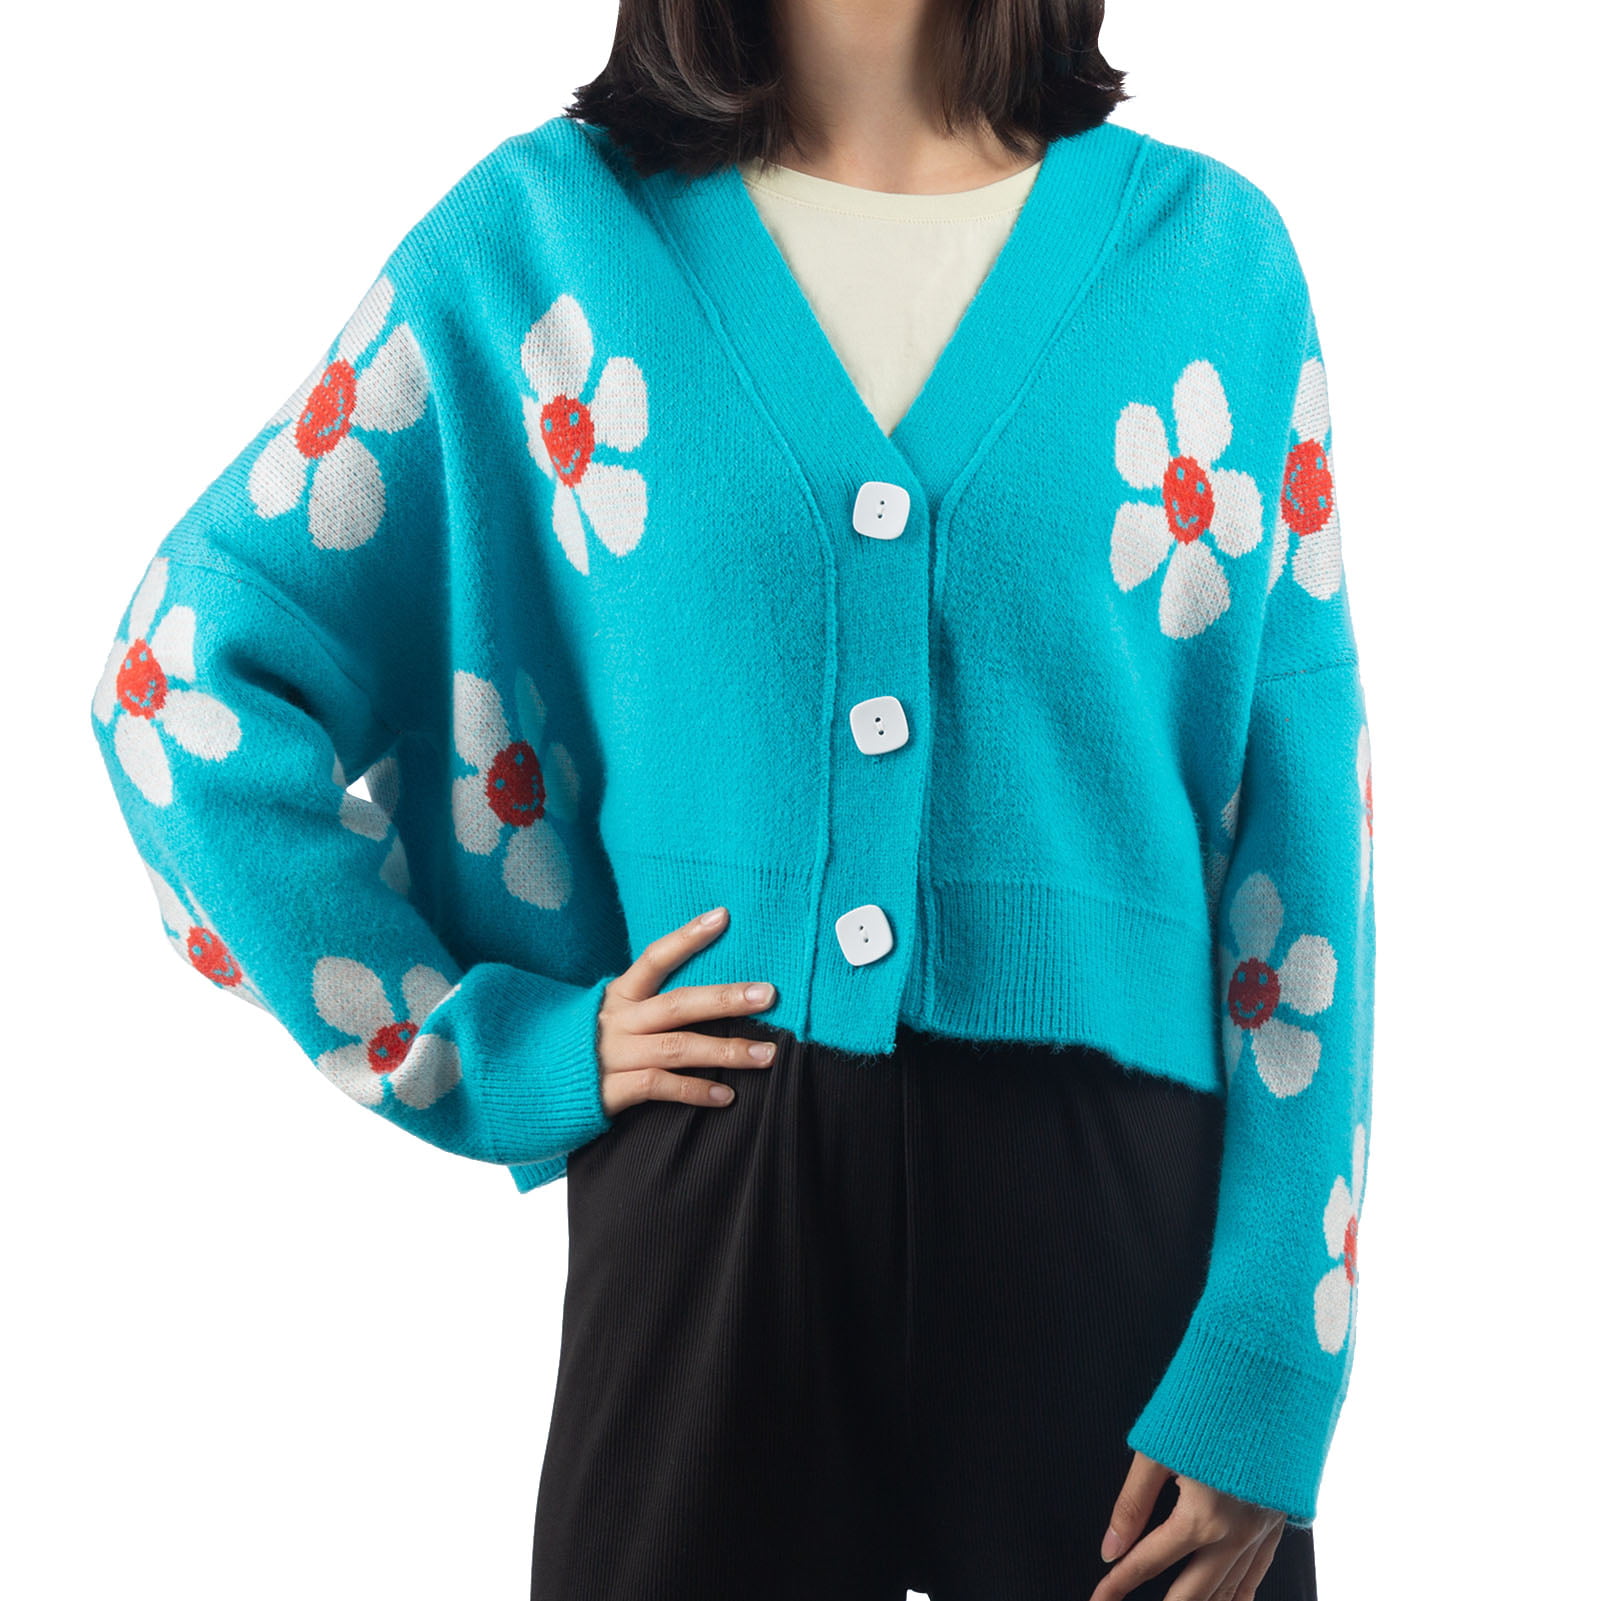 GRACE KARIN Kids Little Girls Cute Open Cardigan Sweater Loose Fit Dropped Shoulder Knitted Jumper 6-12 Years